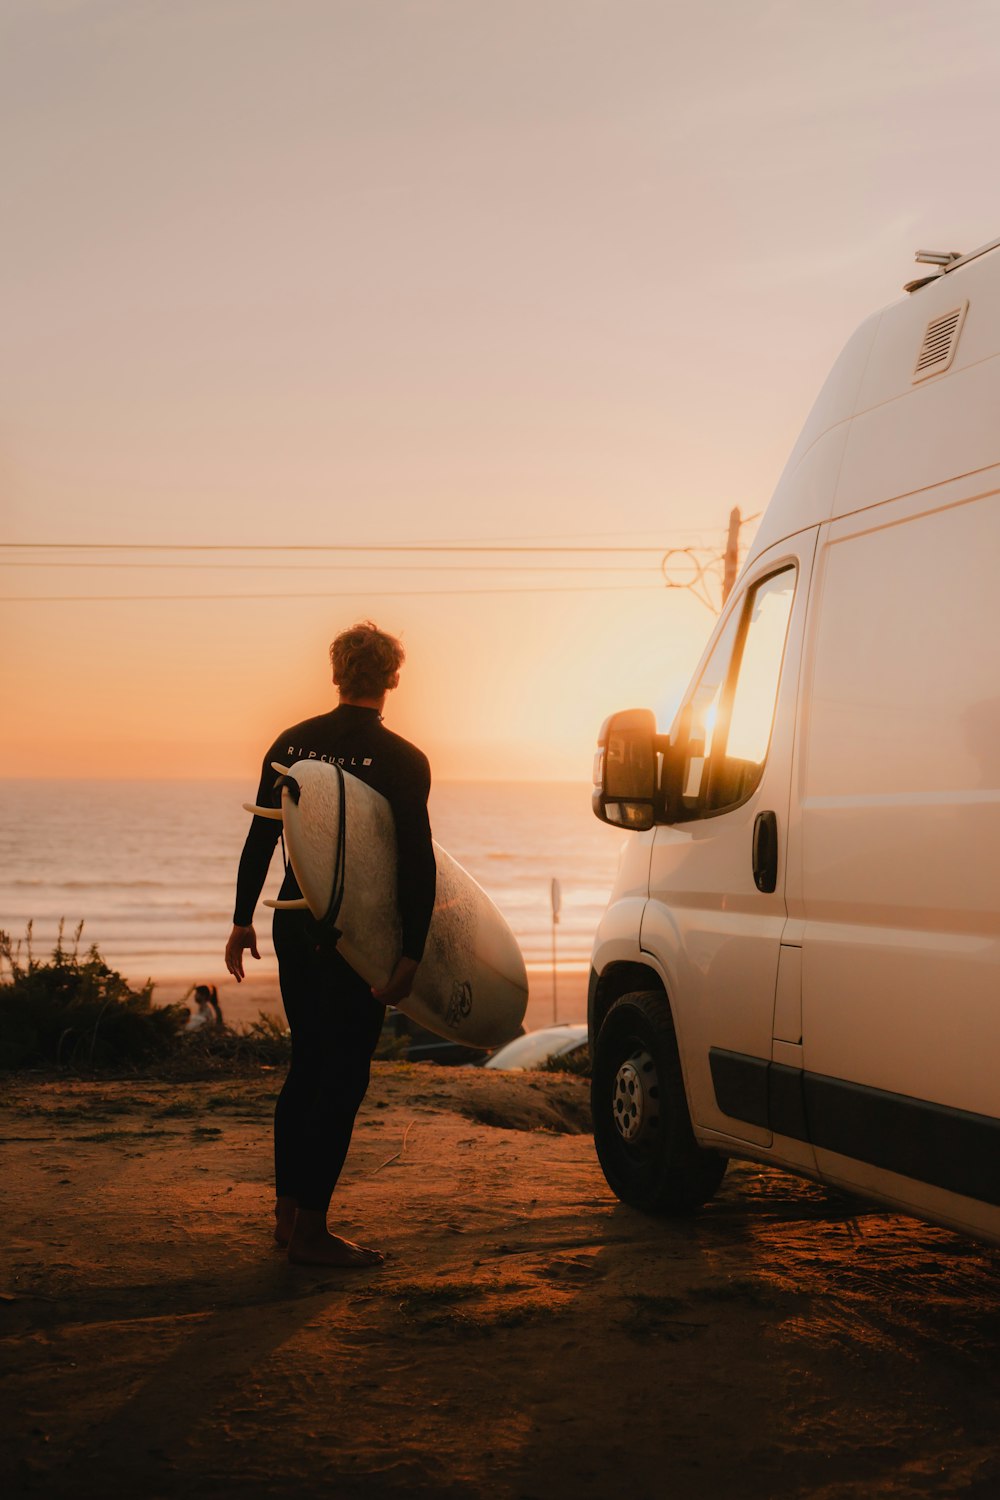 a man carrying a surfboard next to a van